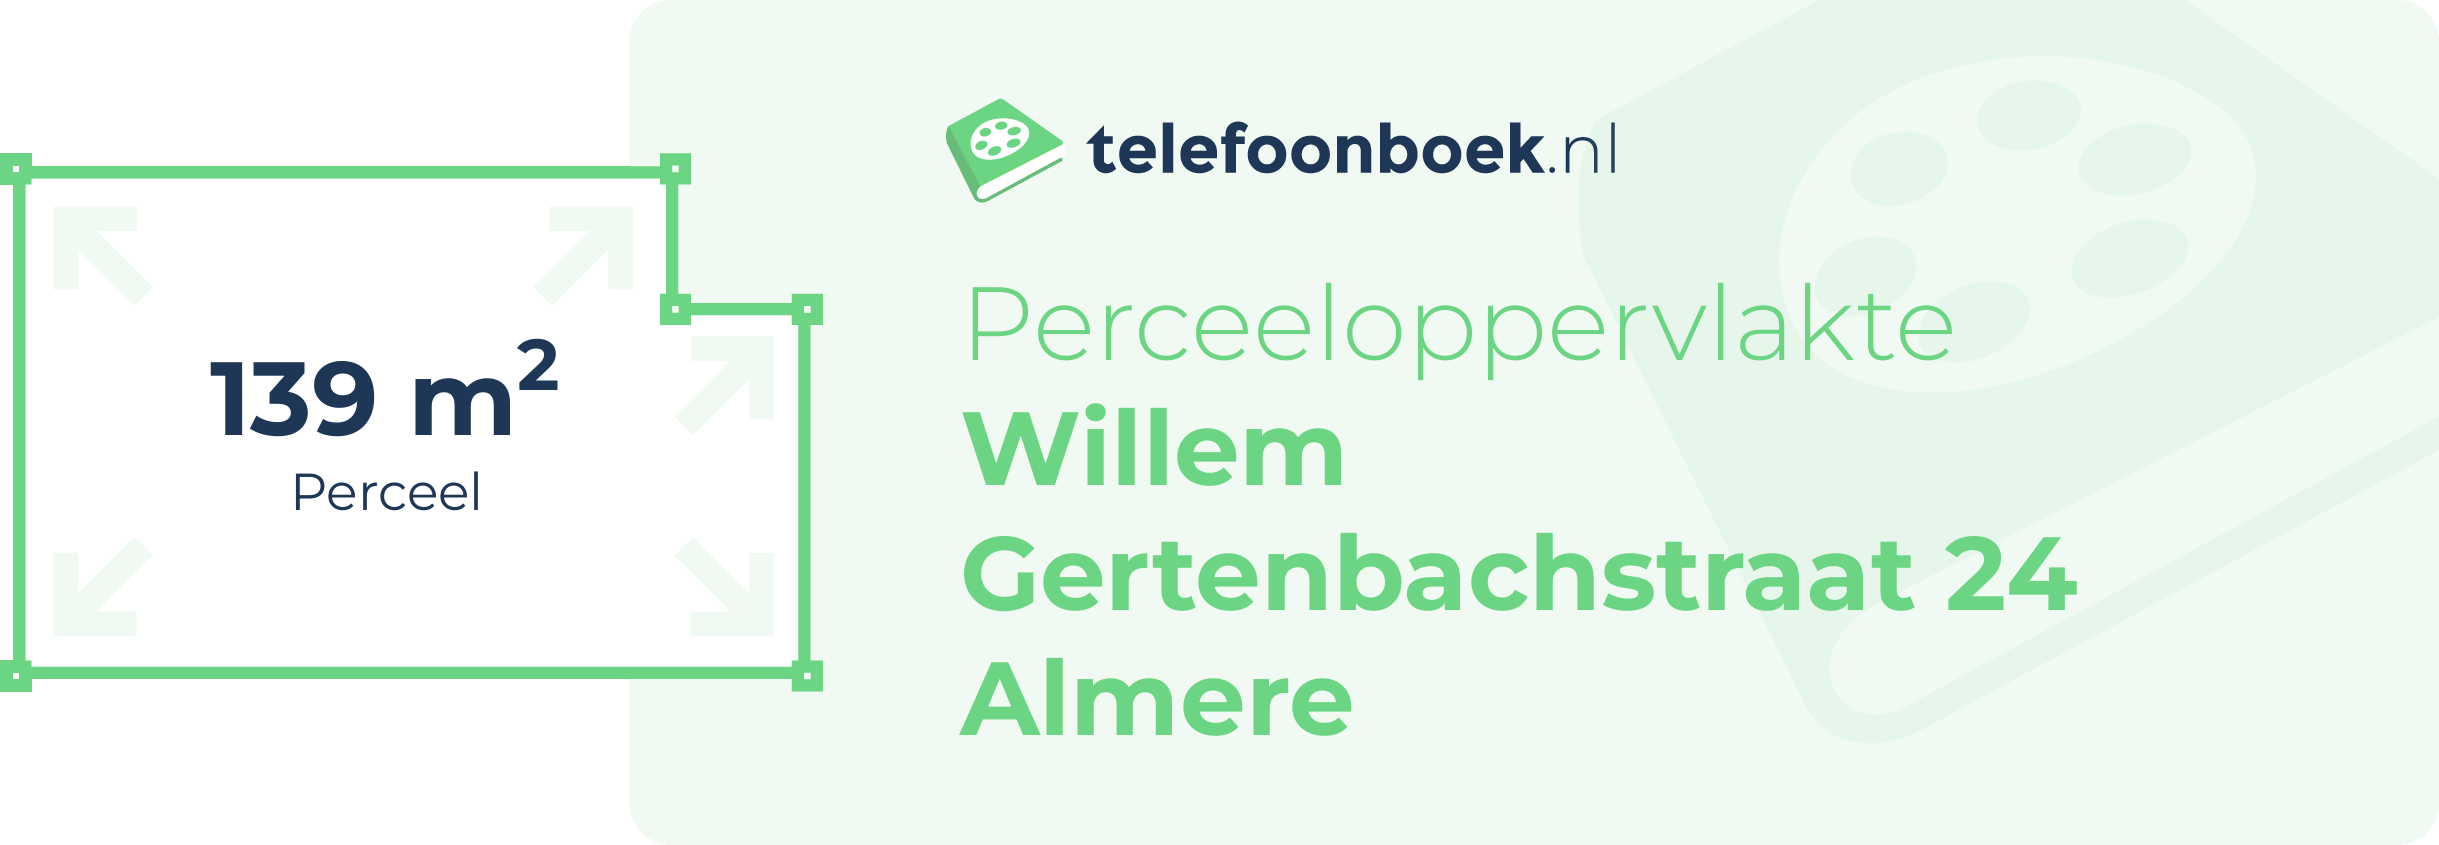 Perceeloppervlakte Willem Gertenbachstraat 24 Almere